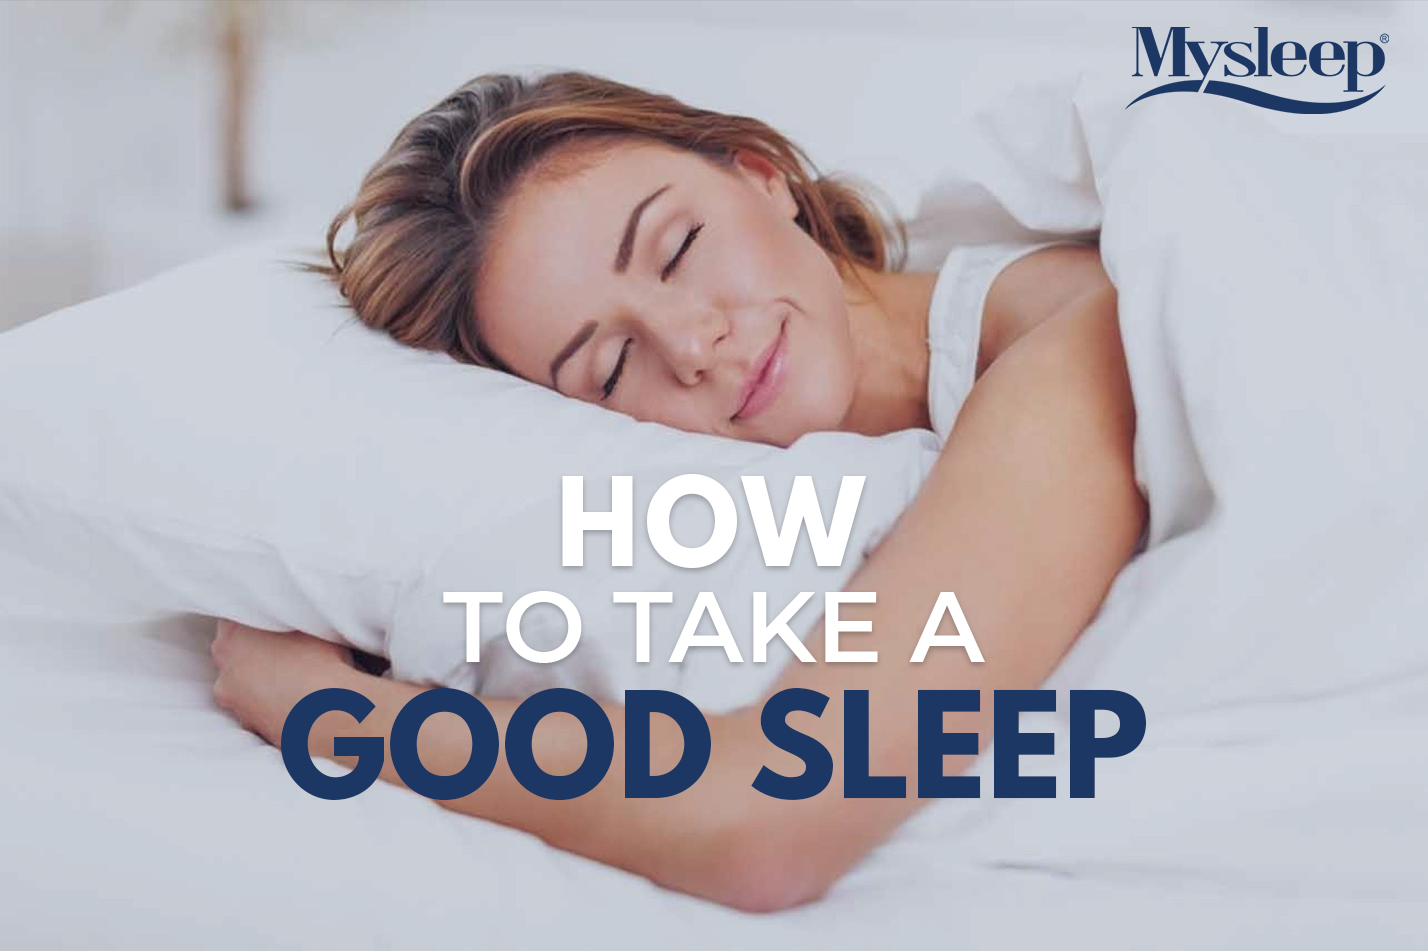 HOW TO TAKE A GOOD SLEEP